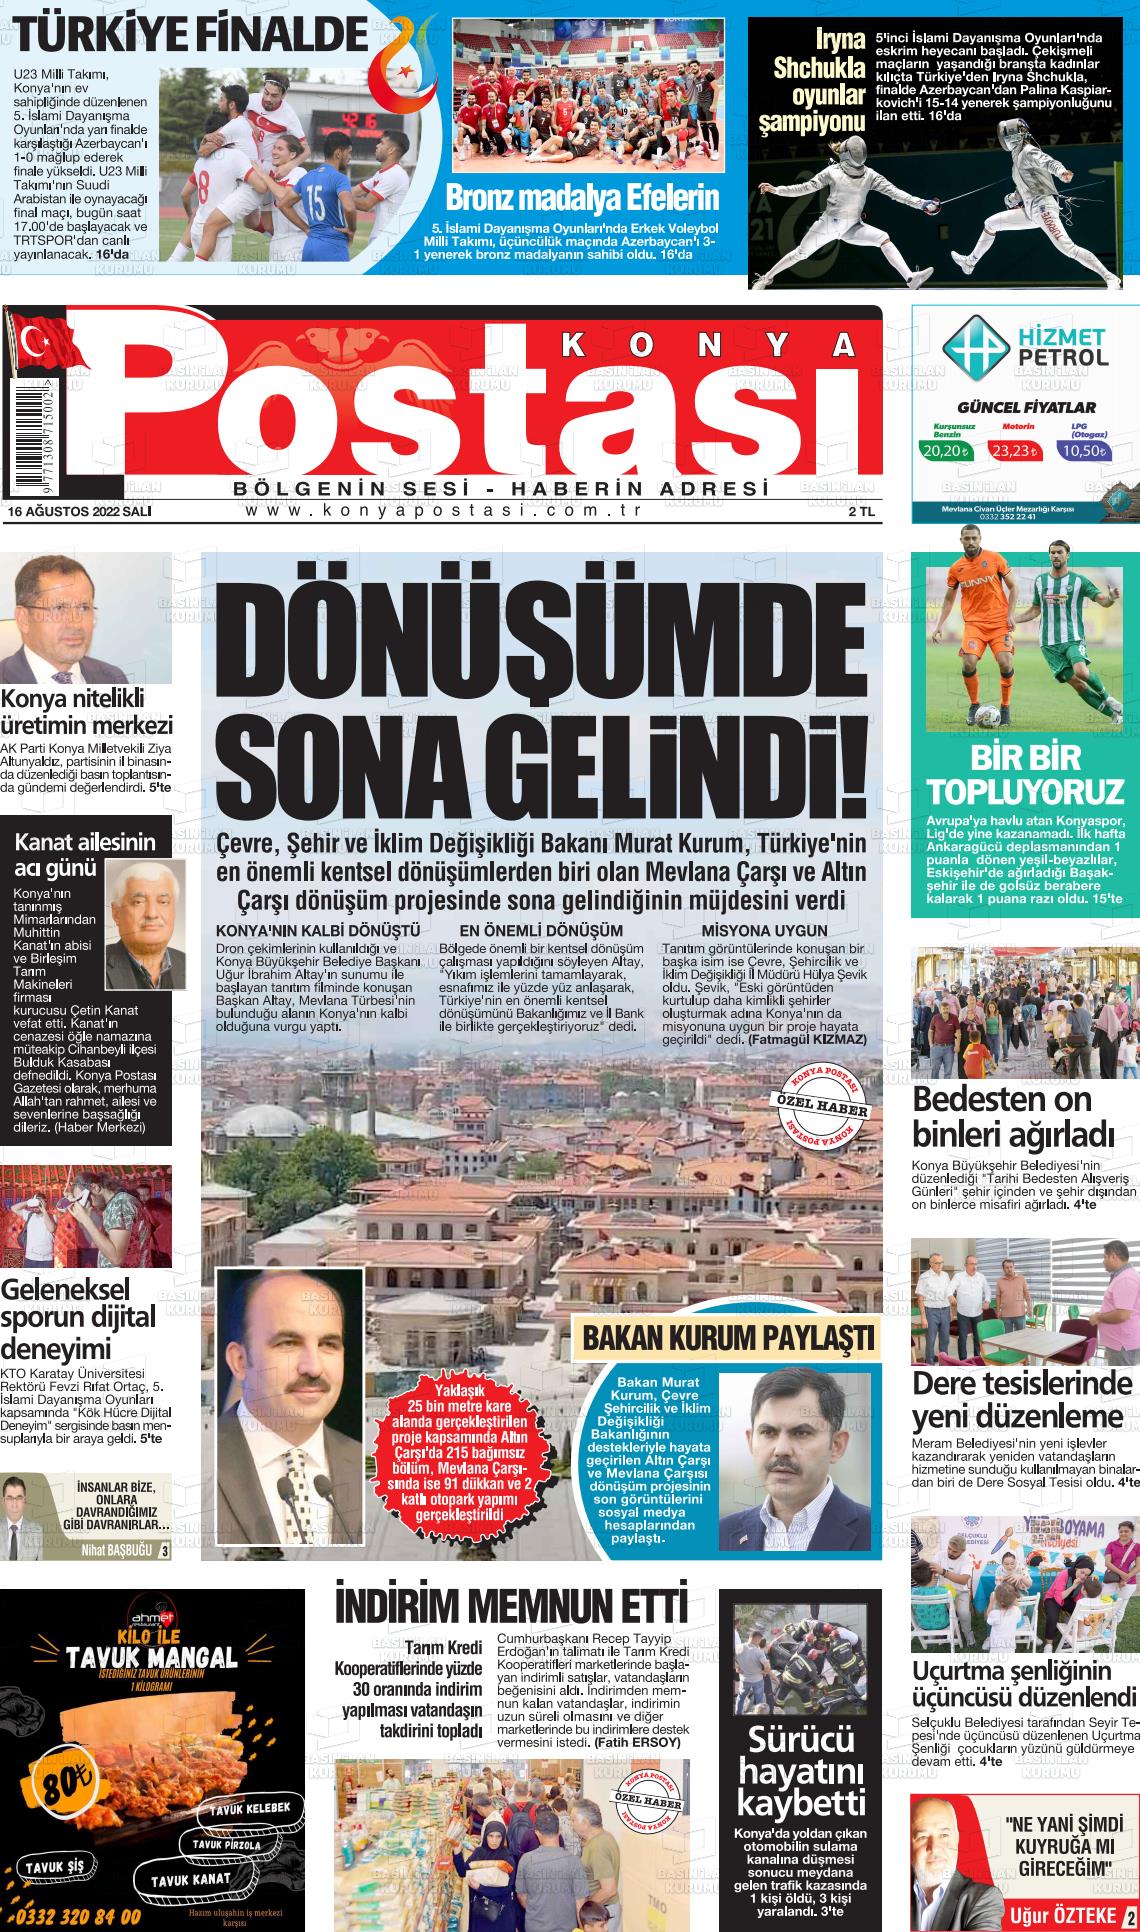 16 Ağustos 2022 Konya Postası Gazete Manşeti